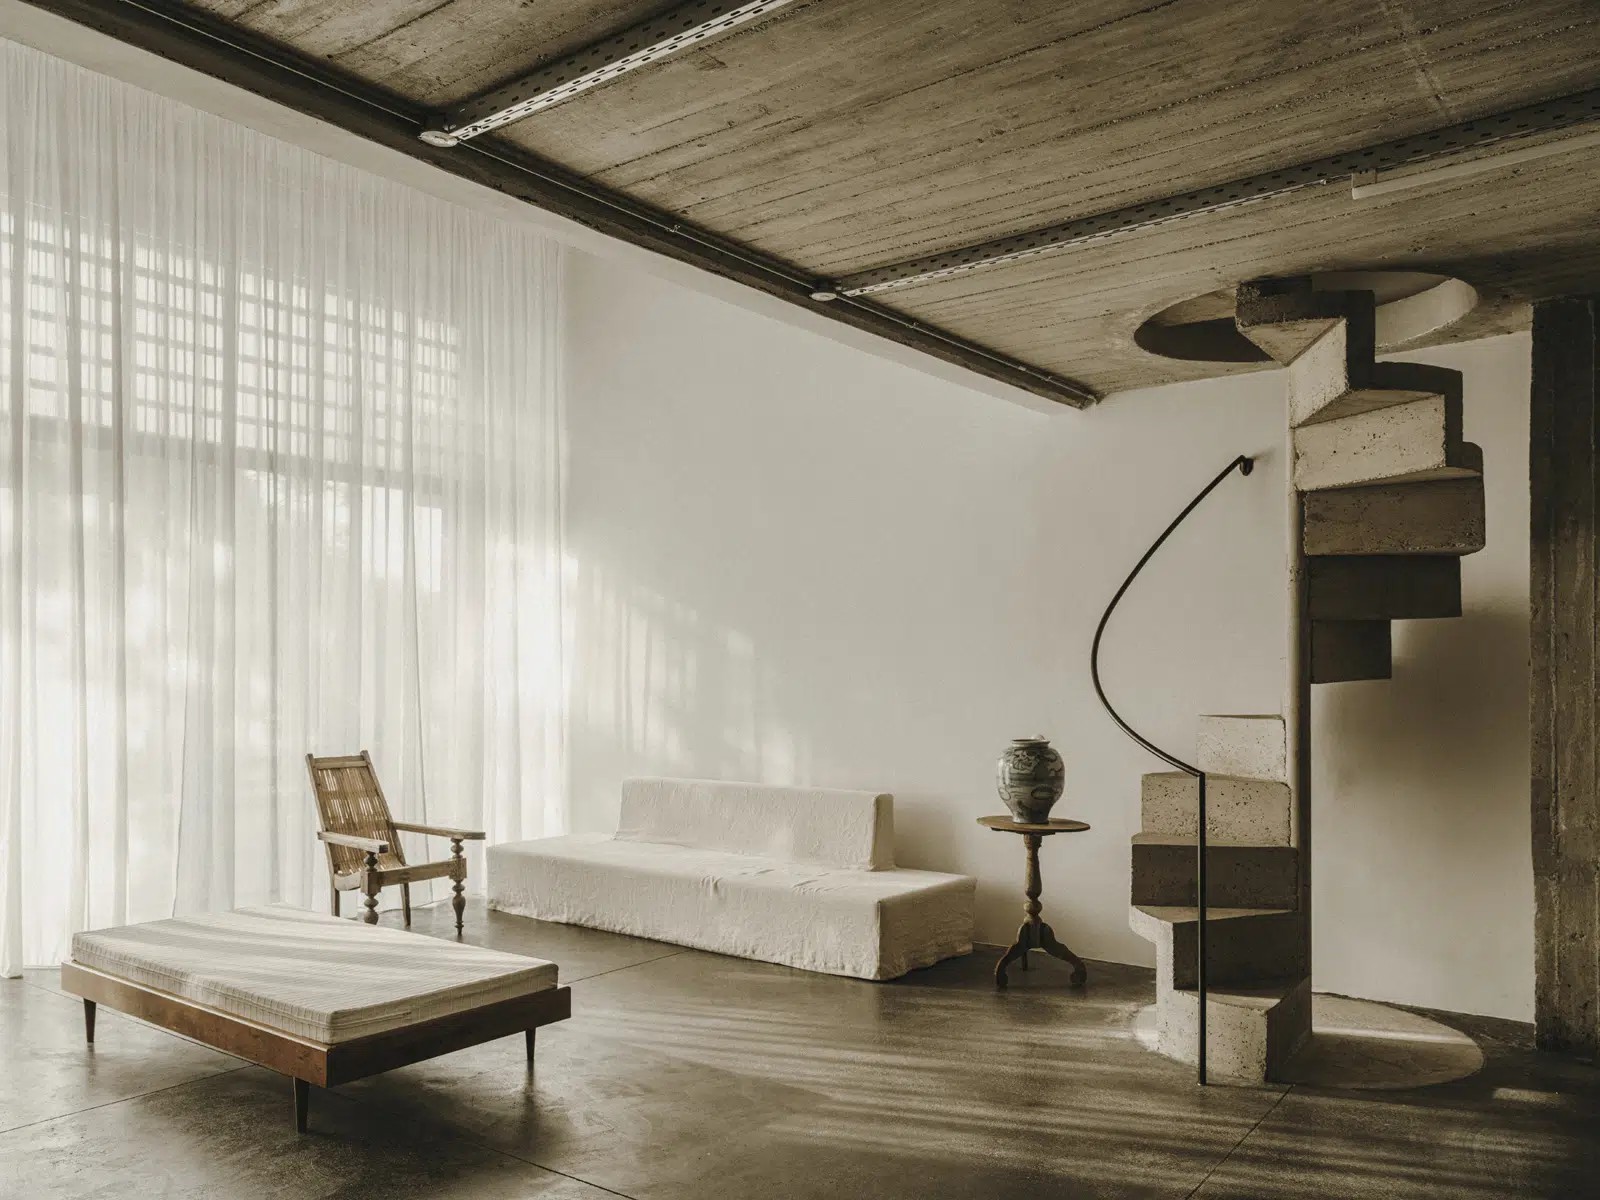 Image of 20220223 Studio Andrew Trotter Gavalas Ioannidou Architecture Eva Papadaki 10AM Lofts 05.jpg in 10AM Lofts - Cosentino